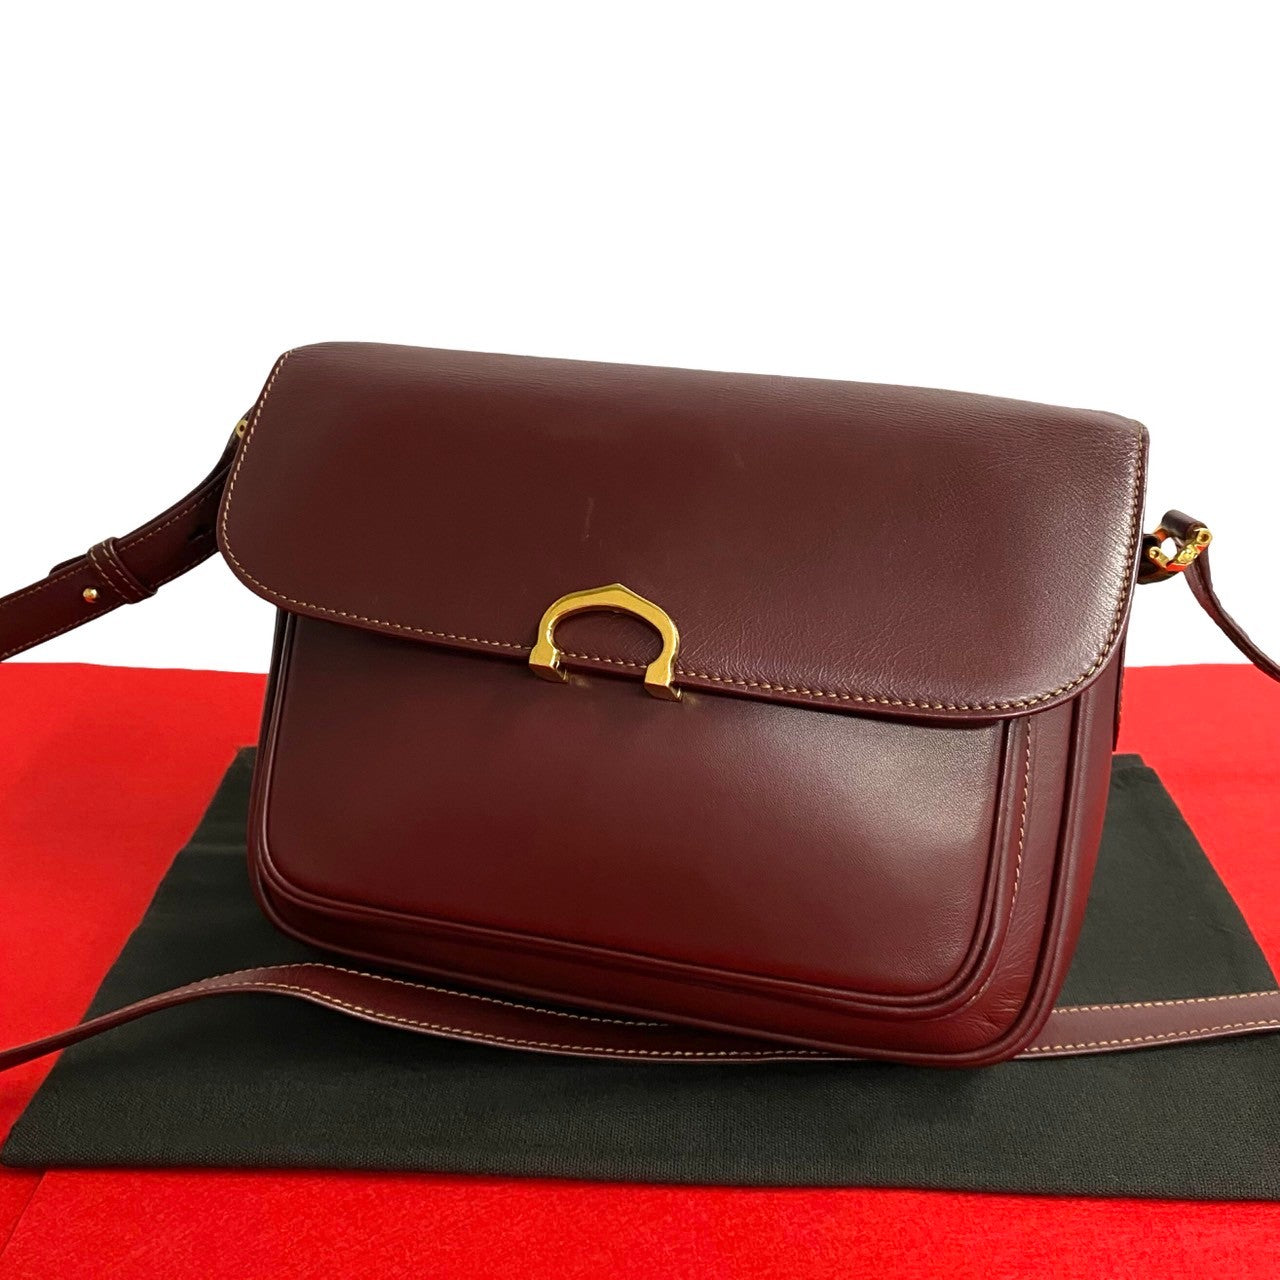 Cartier Cartier Shoulder Bag Leather Must Line Bordeaux Leather Shoulder Bag 无法识别 in Good condition